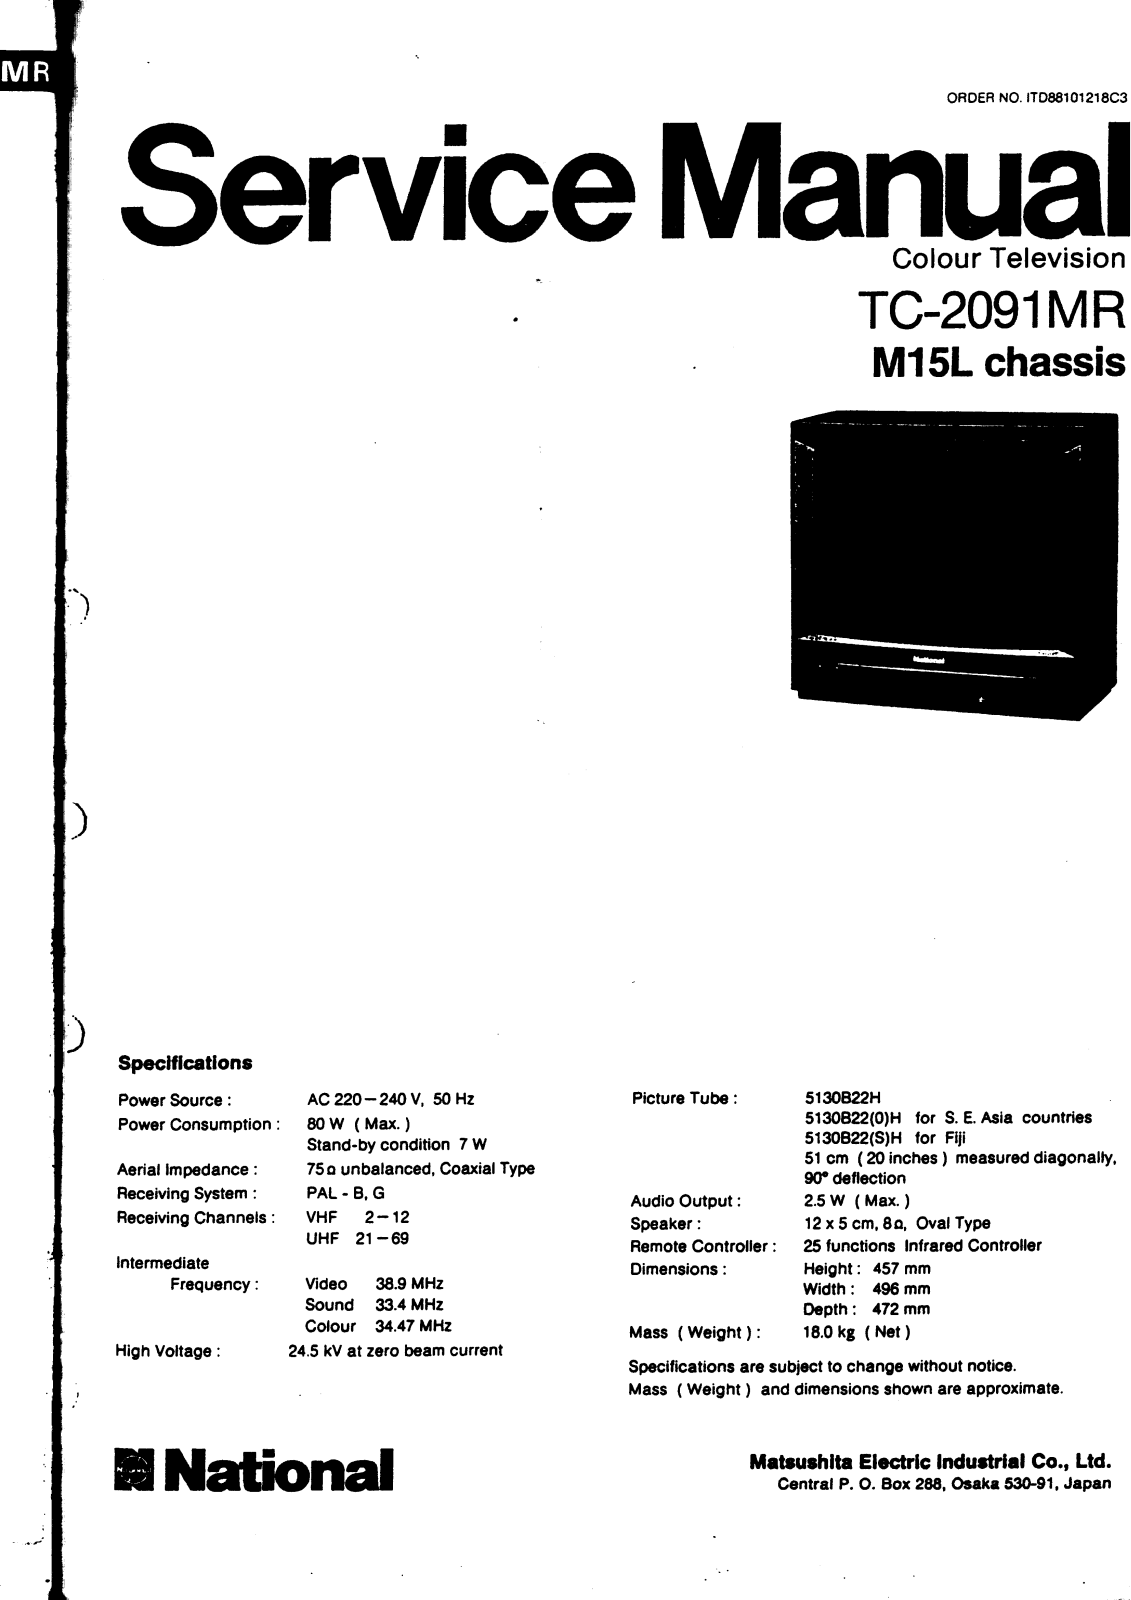 panasonic tc-2091mr Service Manual